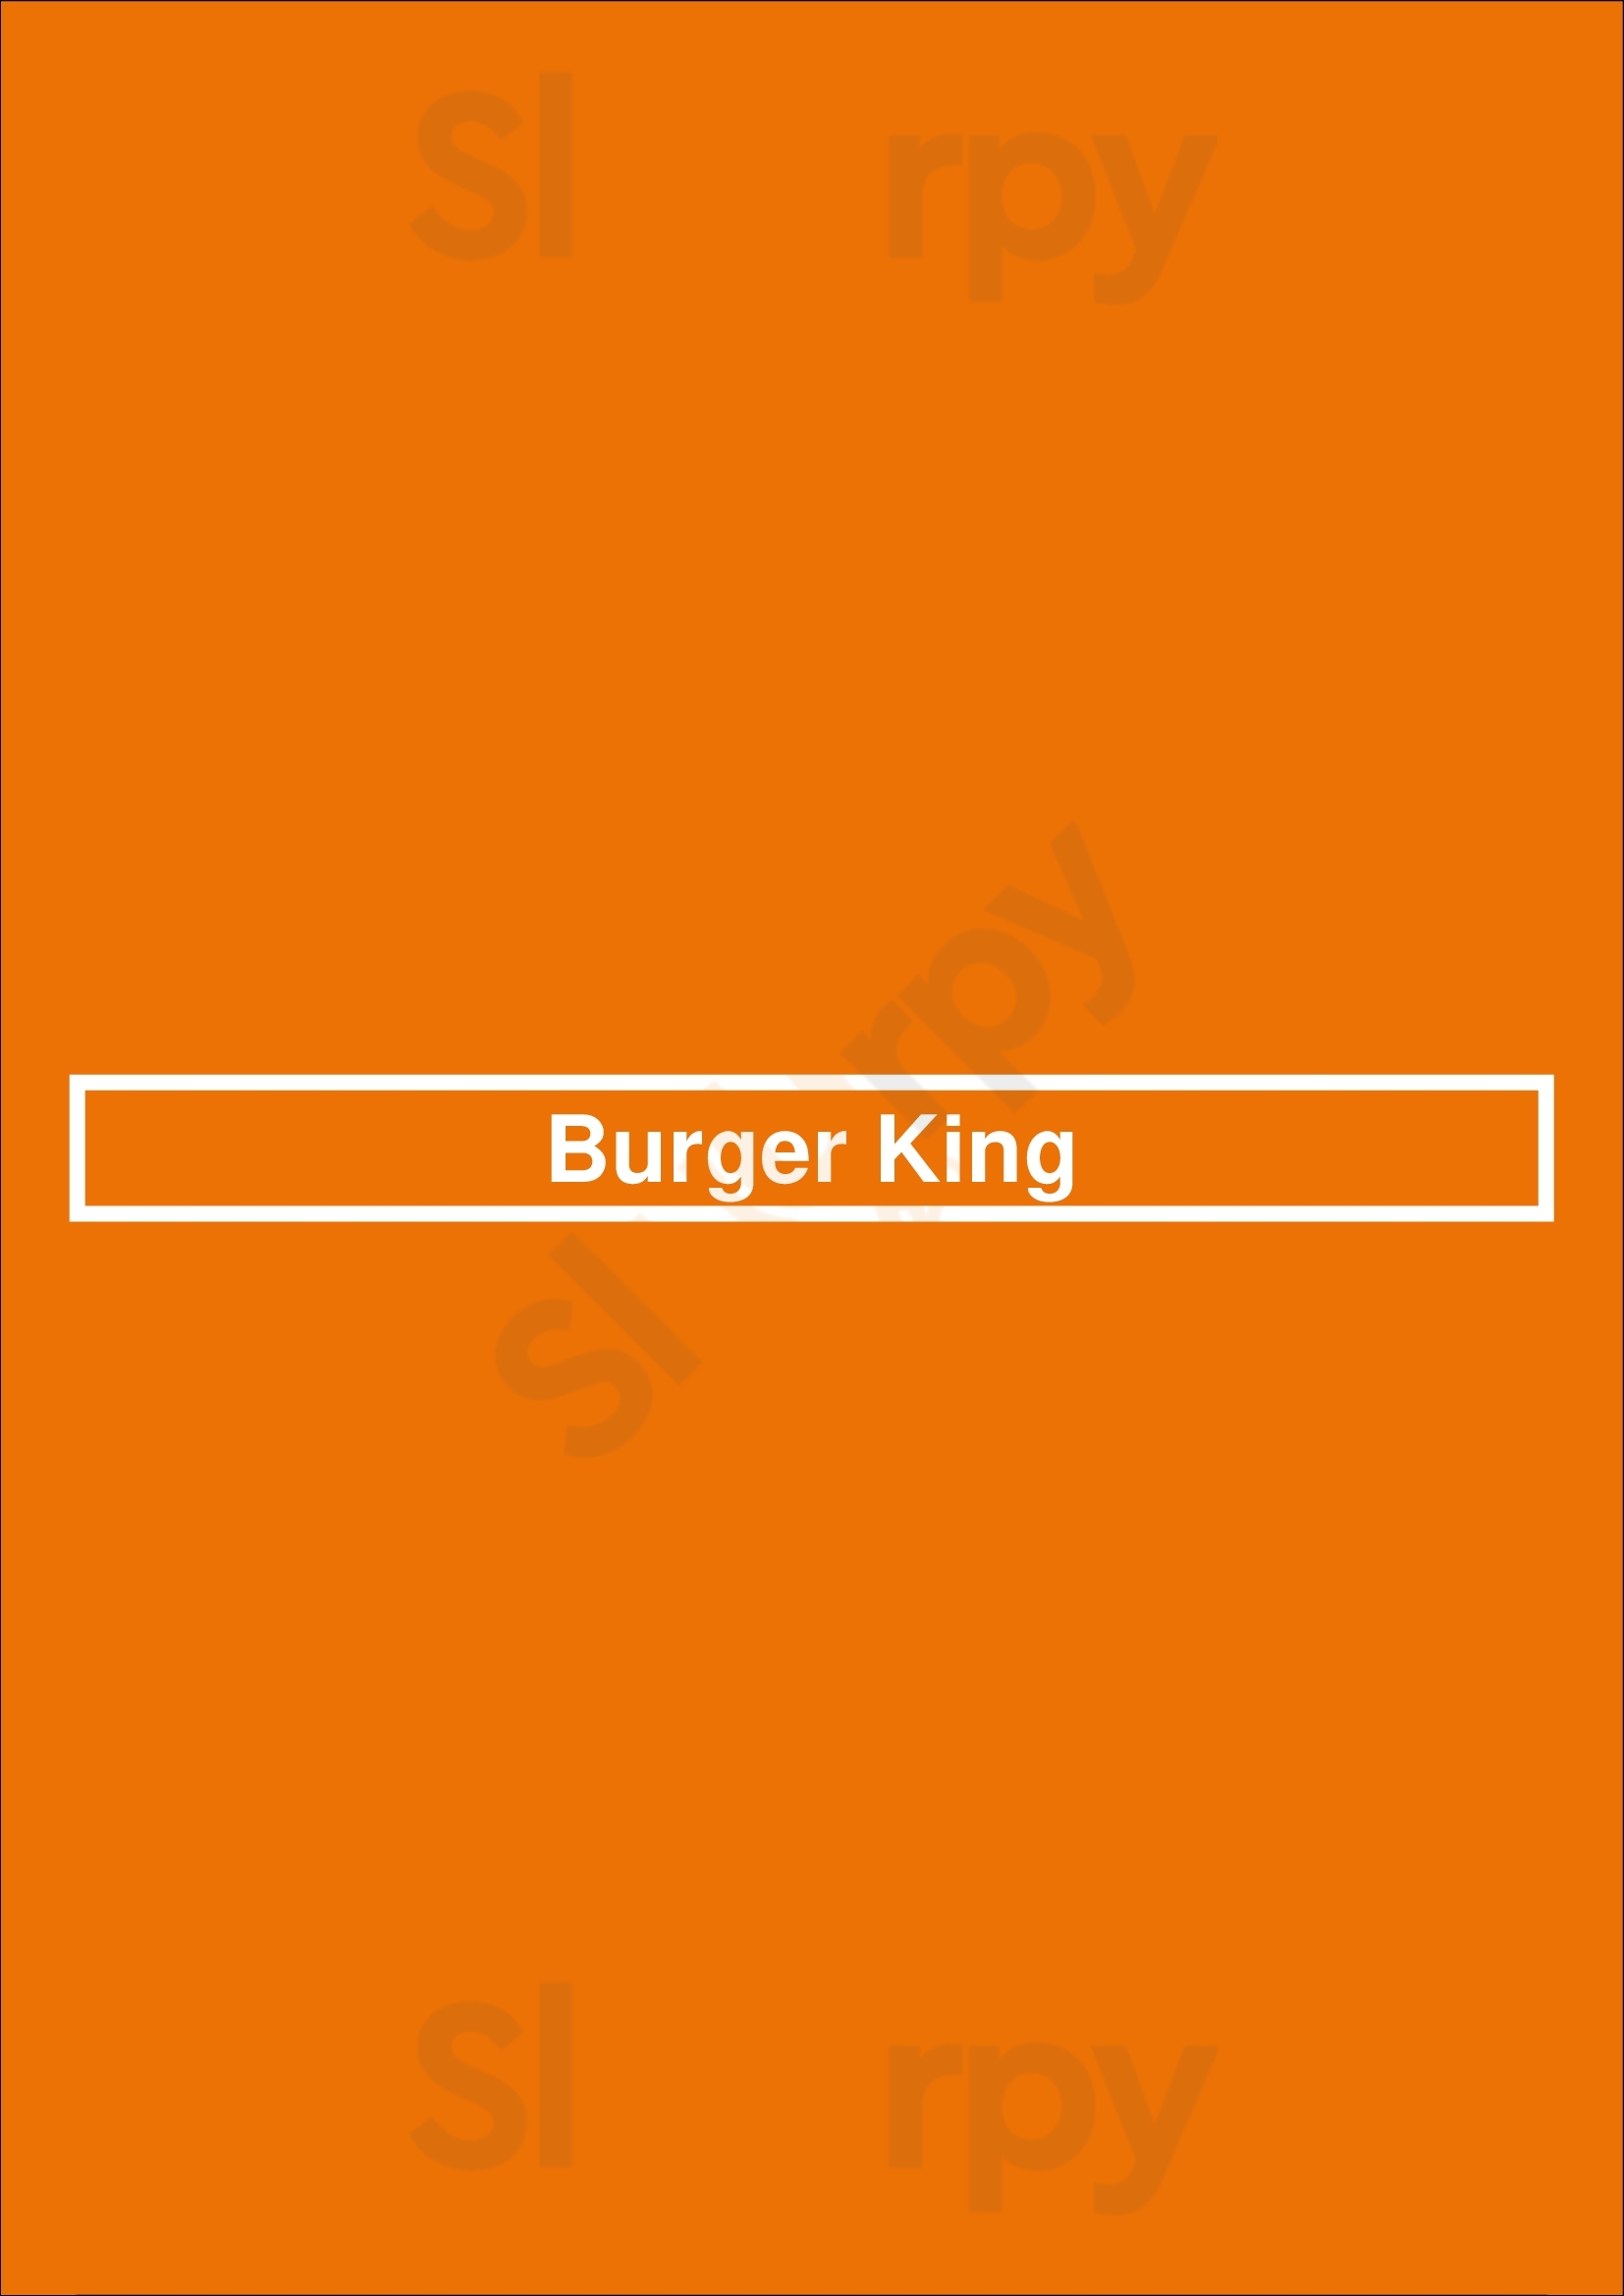 Burger King Miami Menu - 1